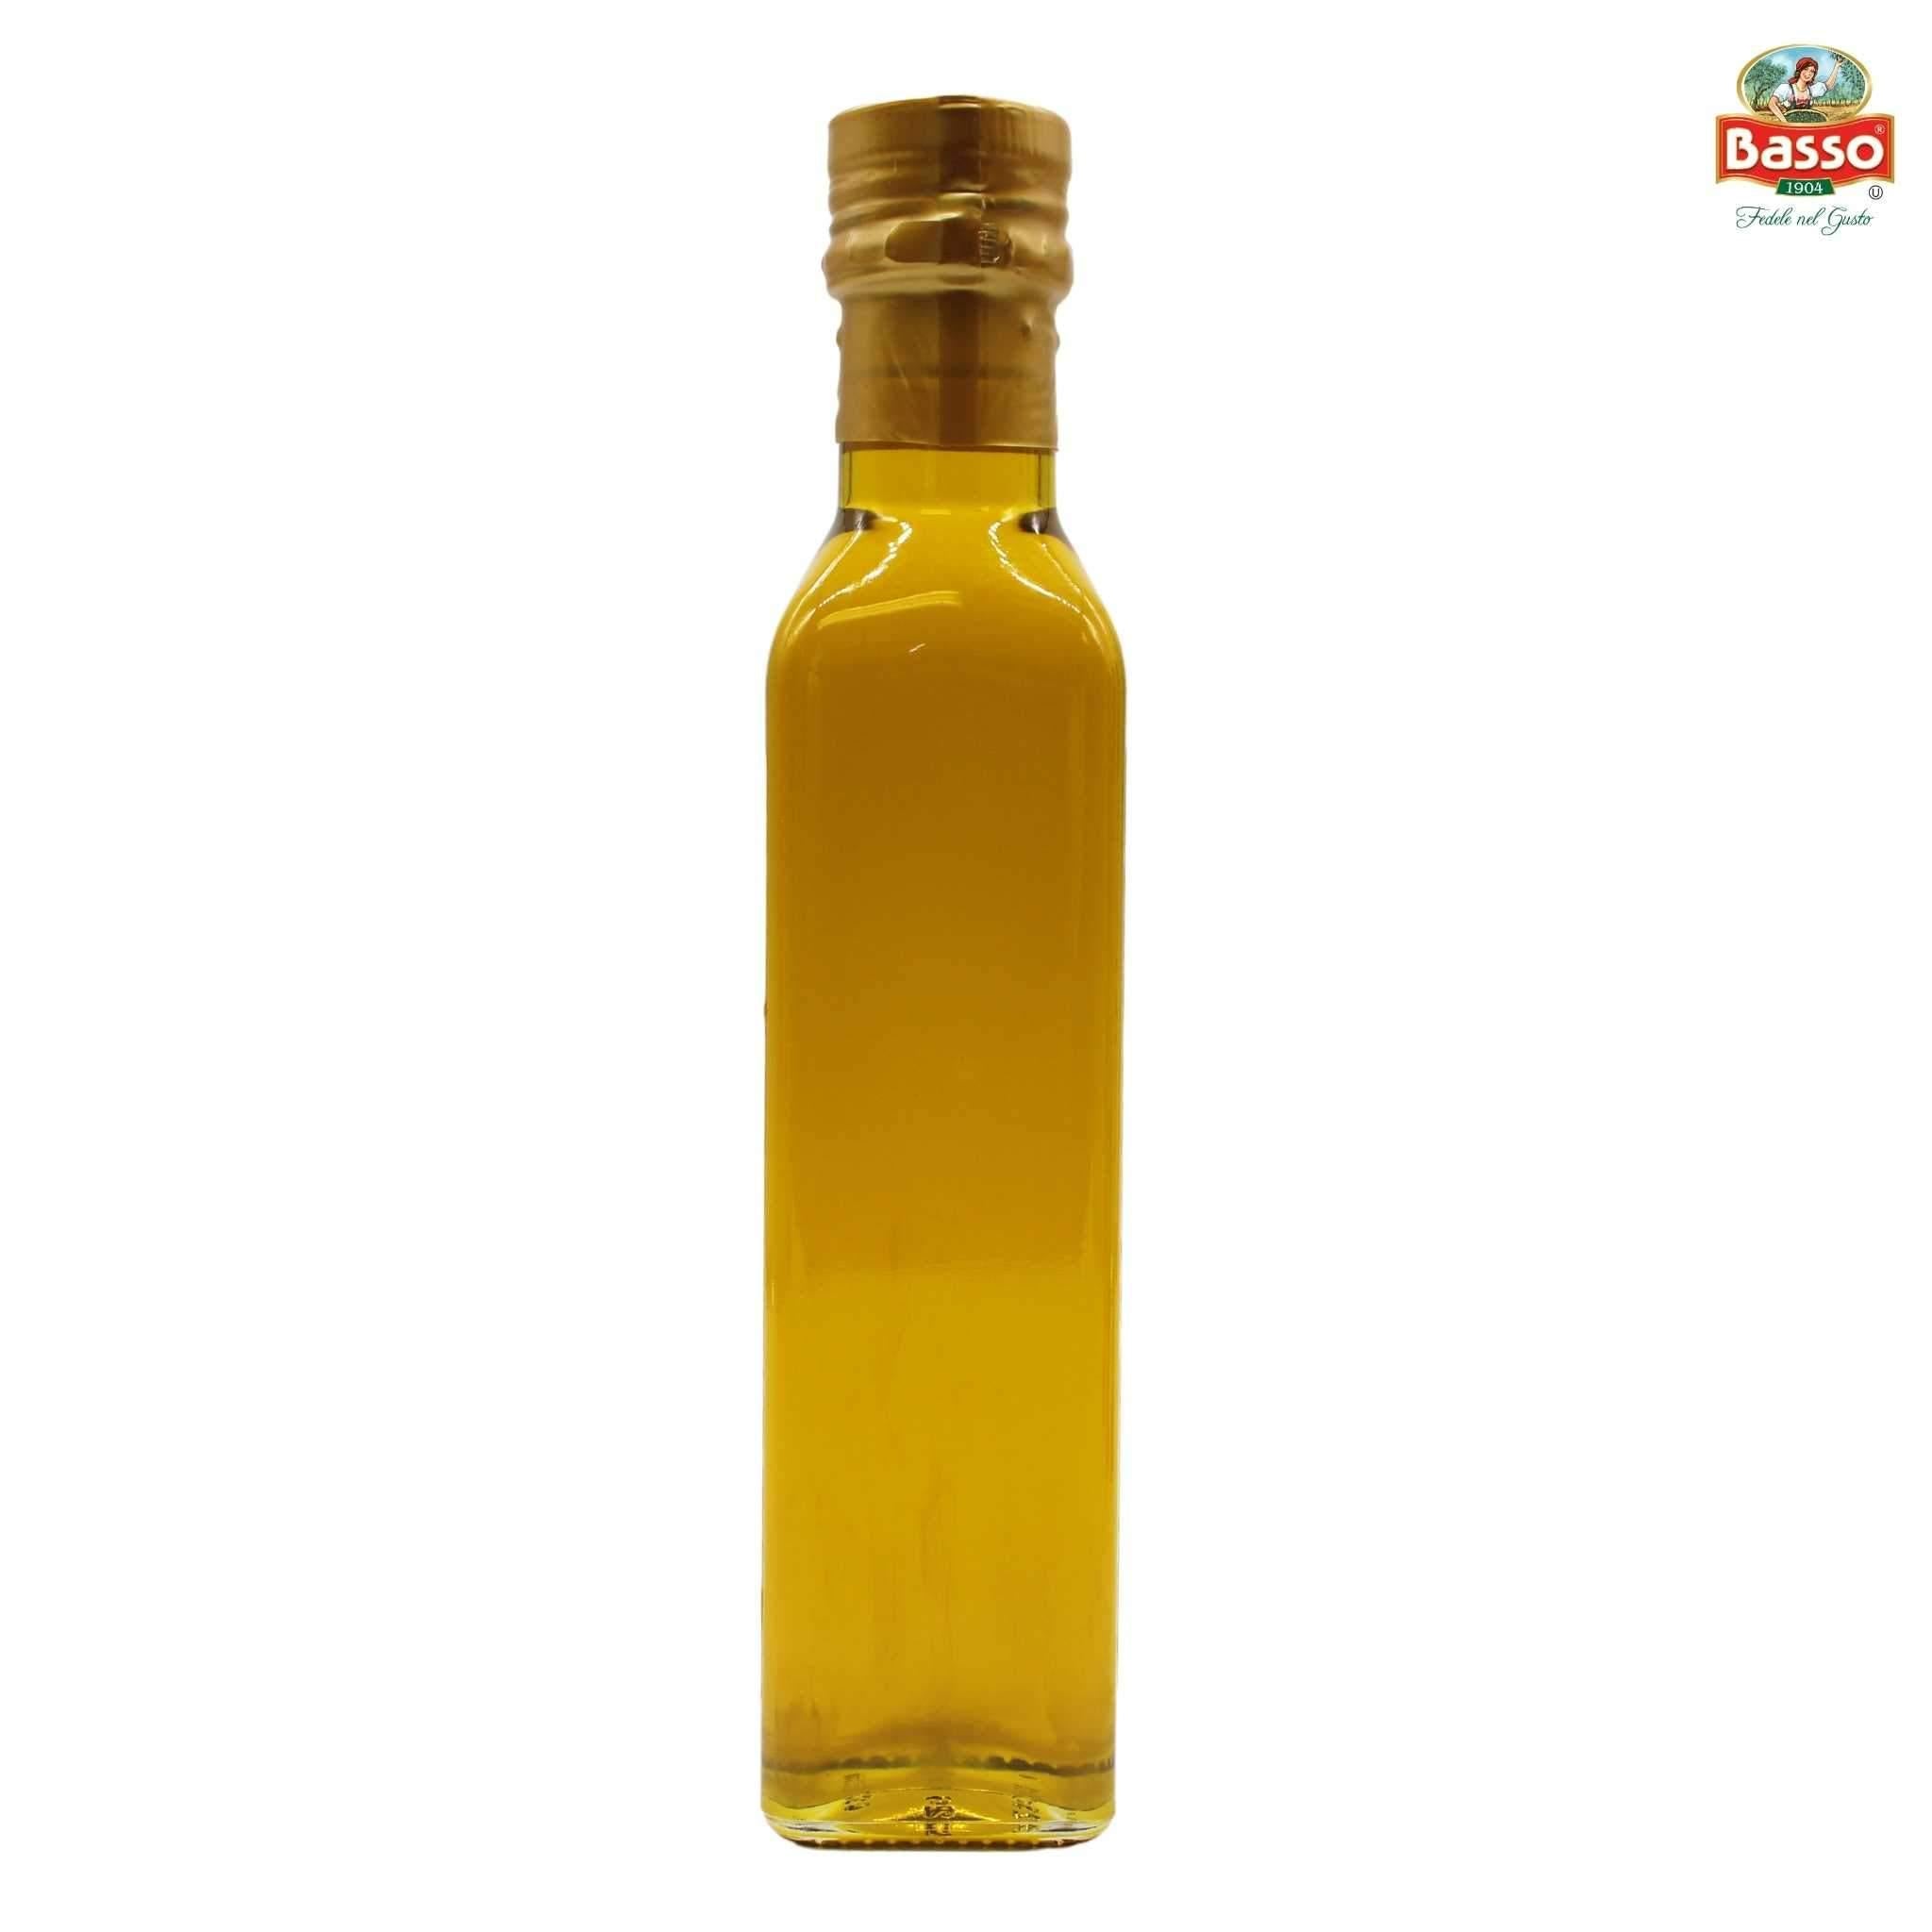 Basso Extra Virgin Olive Oil White Truffle 8.5 fl oz